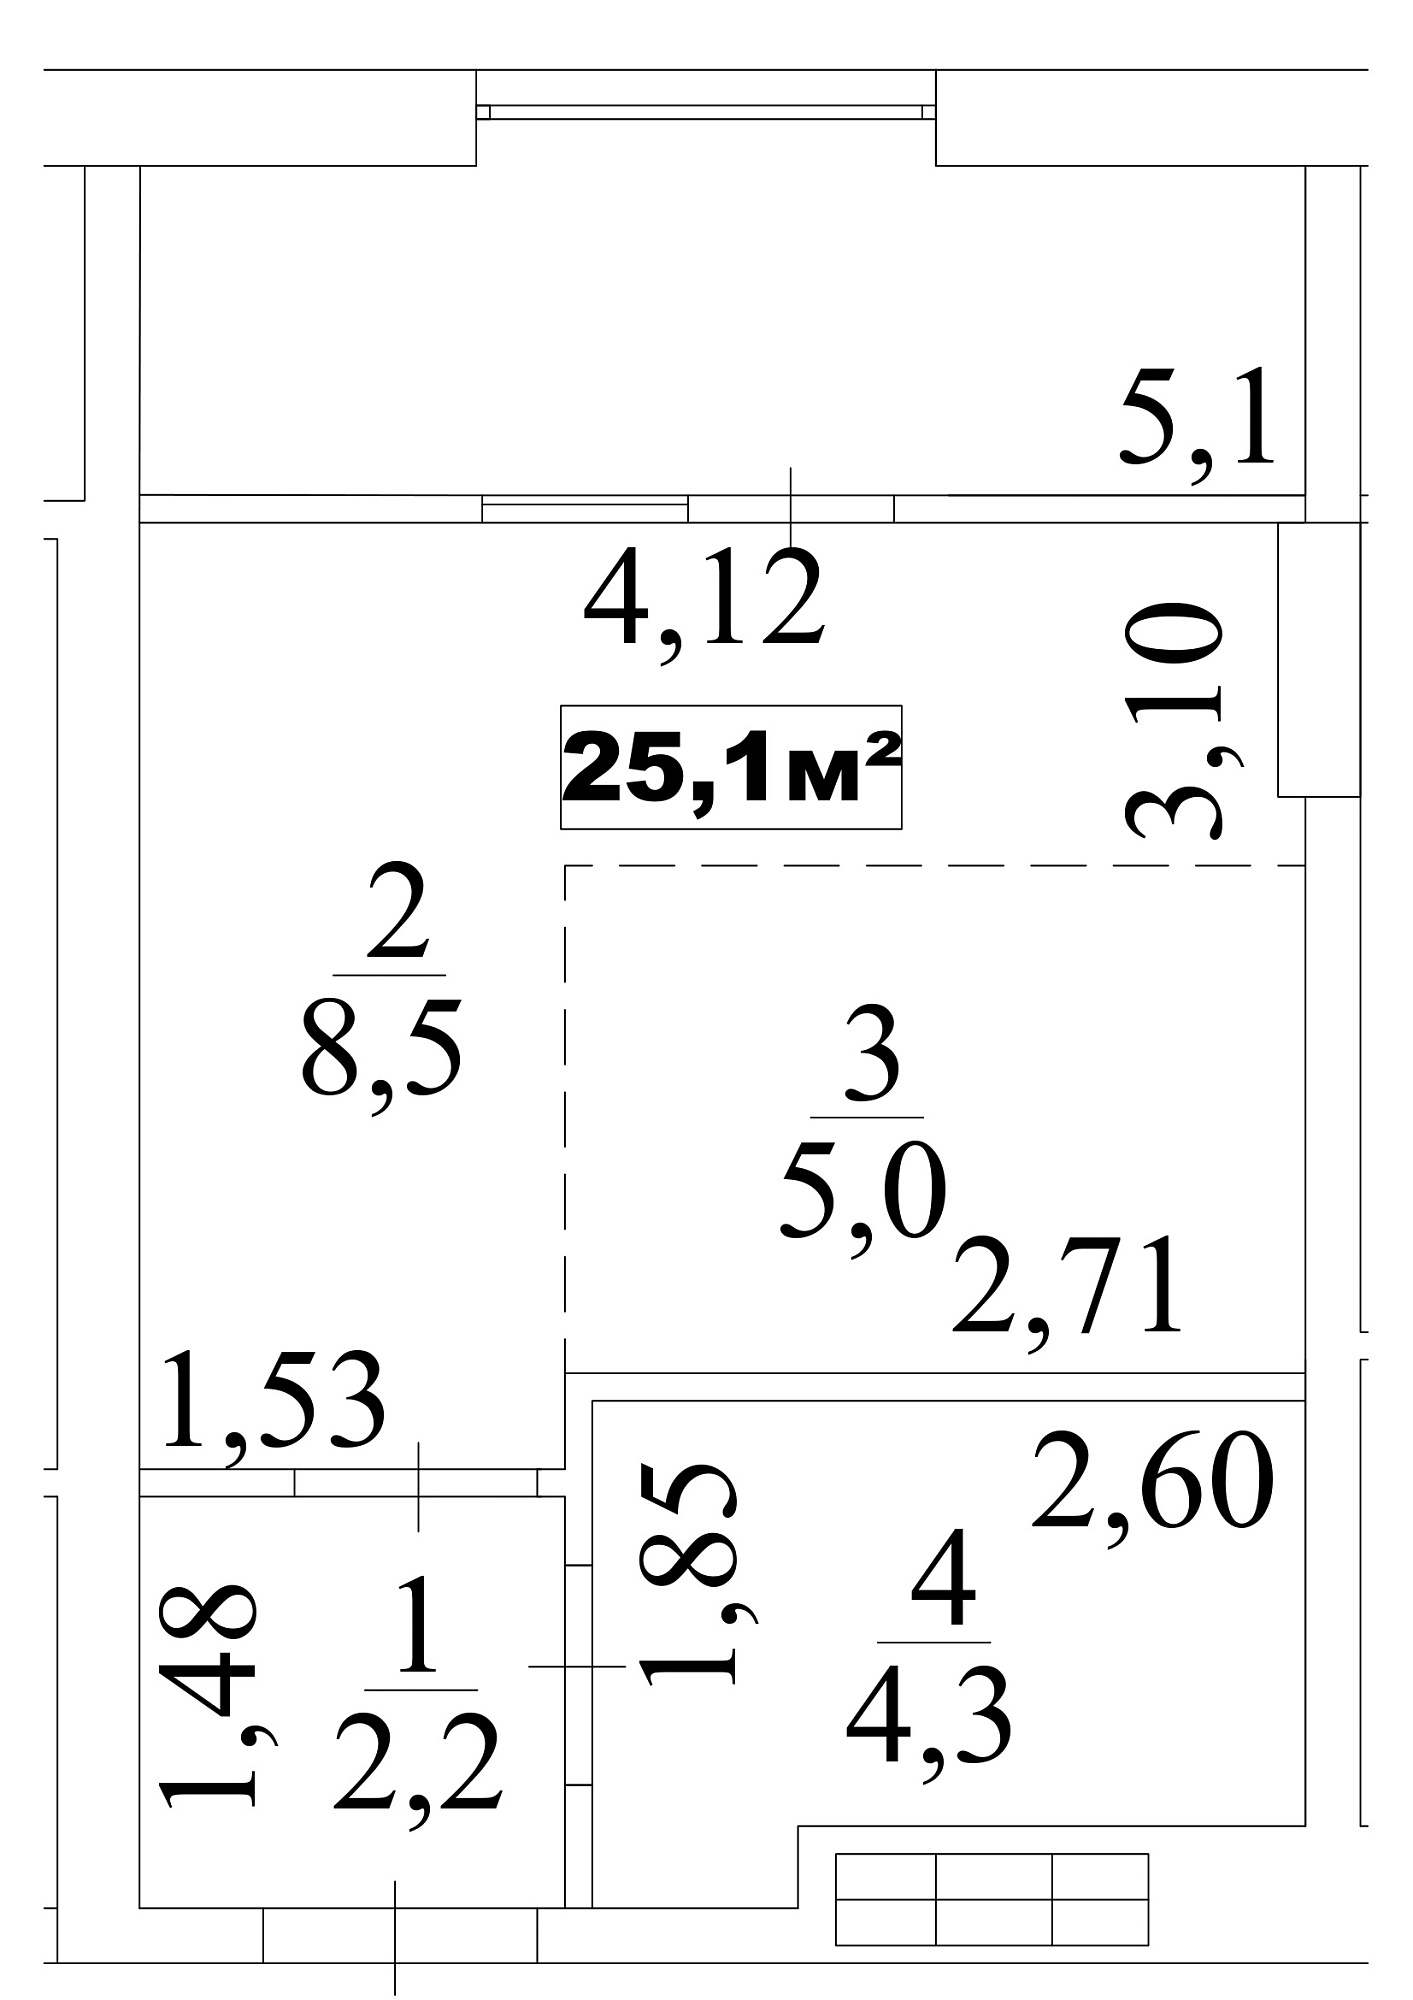 Planning Smart flats area 25.1m2, AB-10-09/0075в.